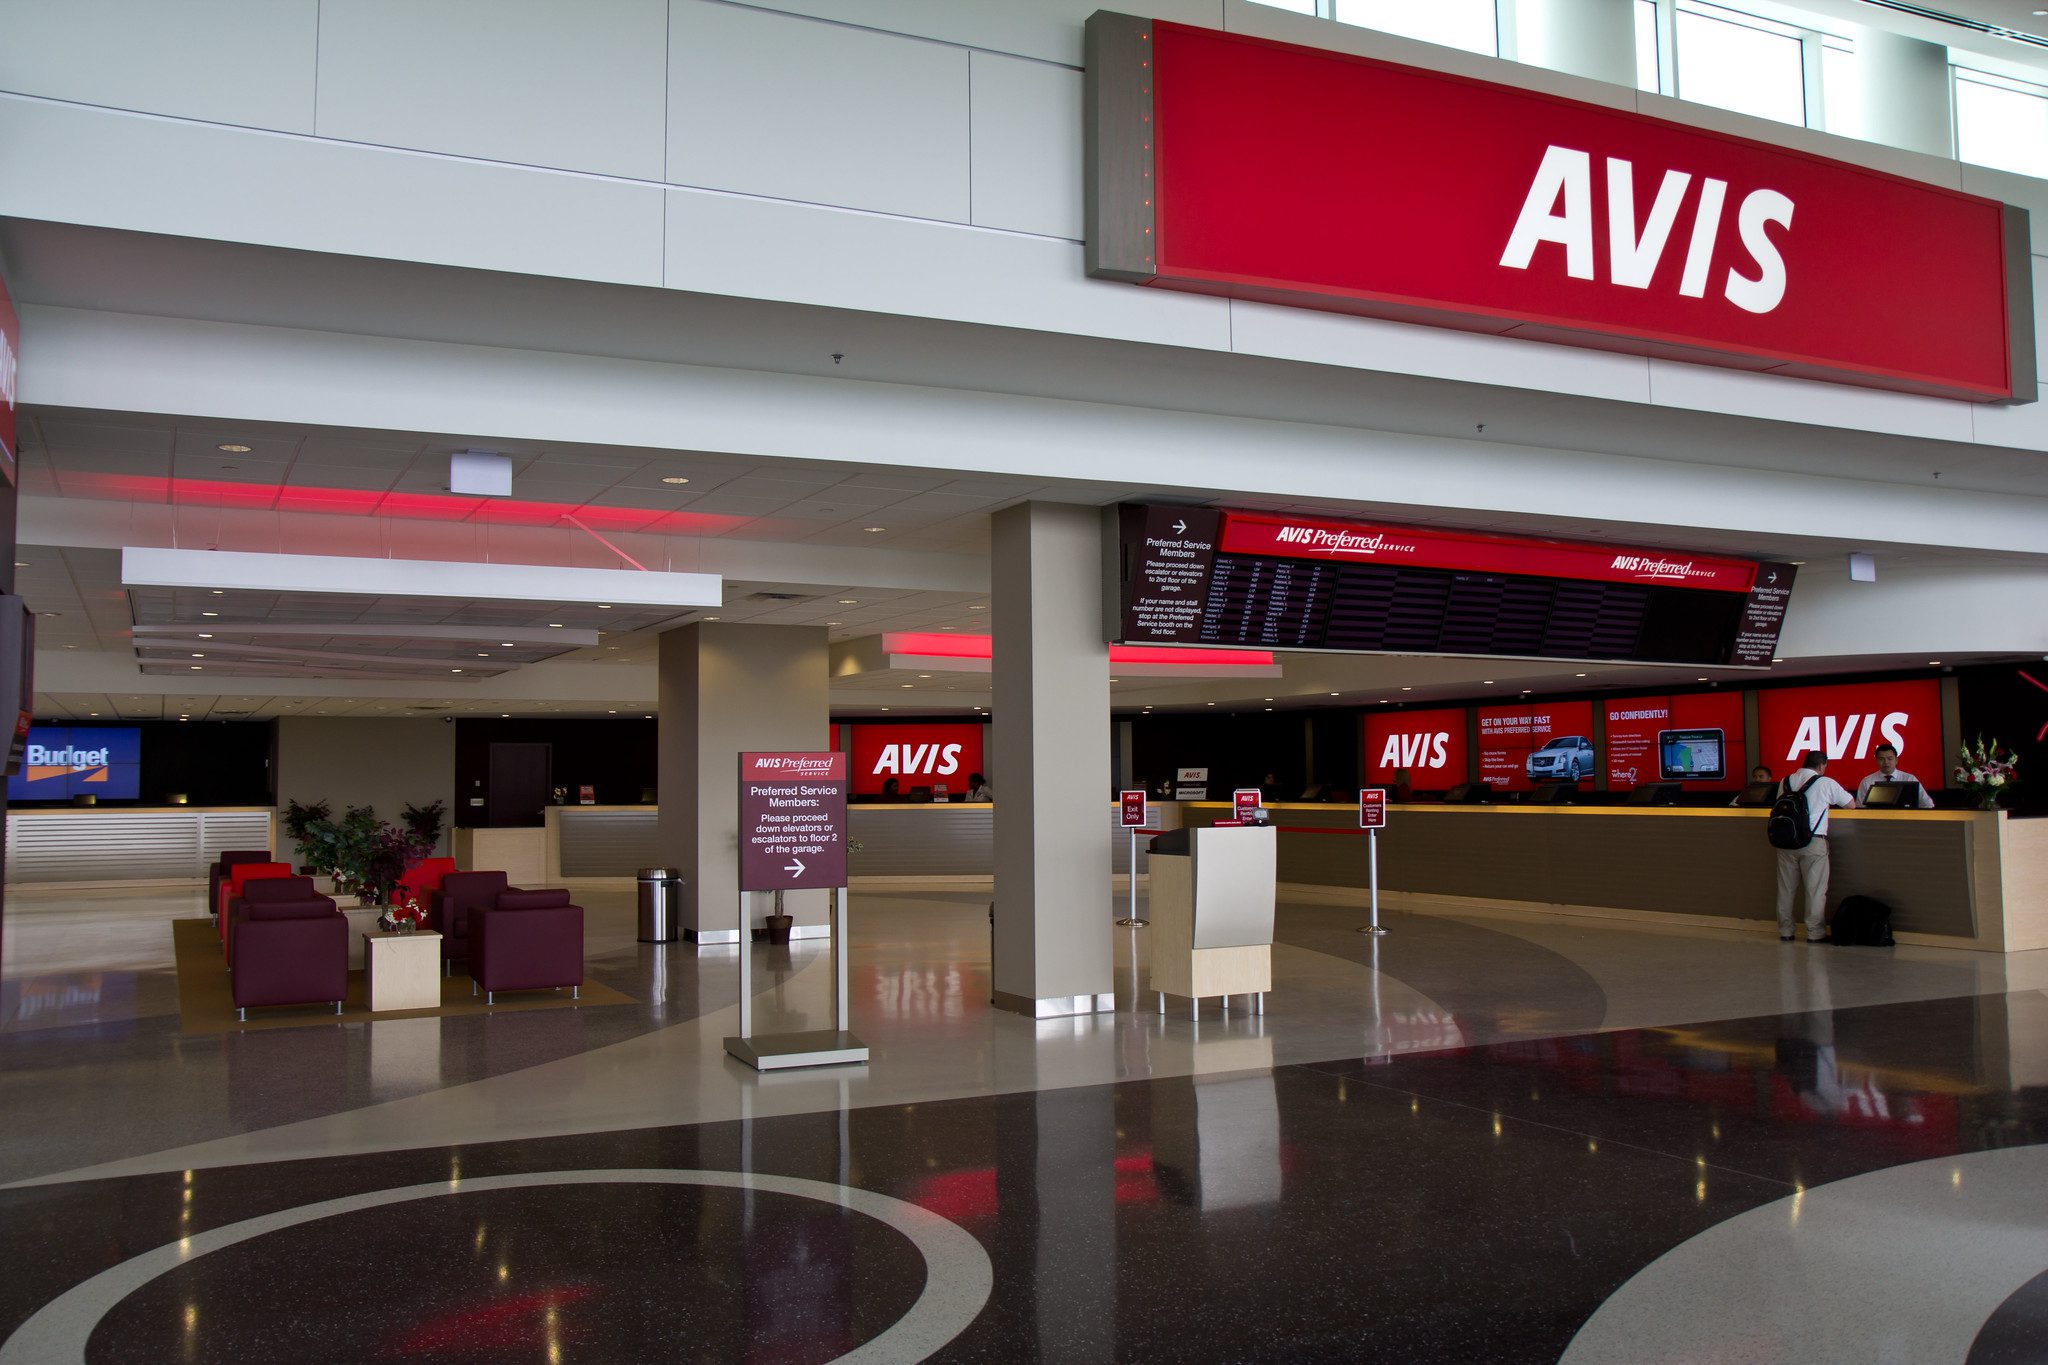 Avis and Hertz Face Big Setbacks as Airports Still Remain Desolate